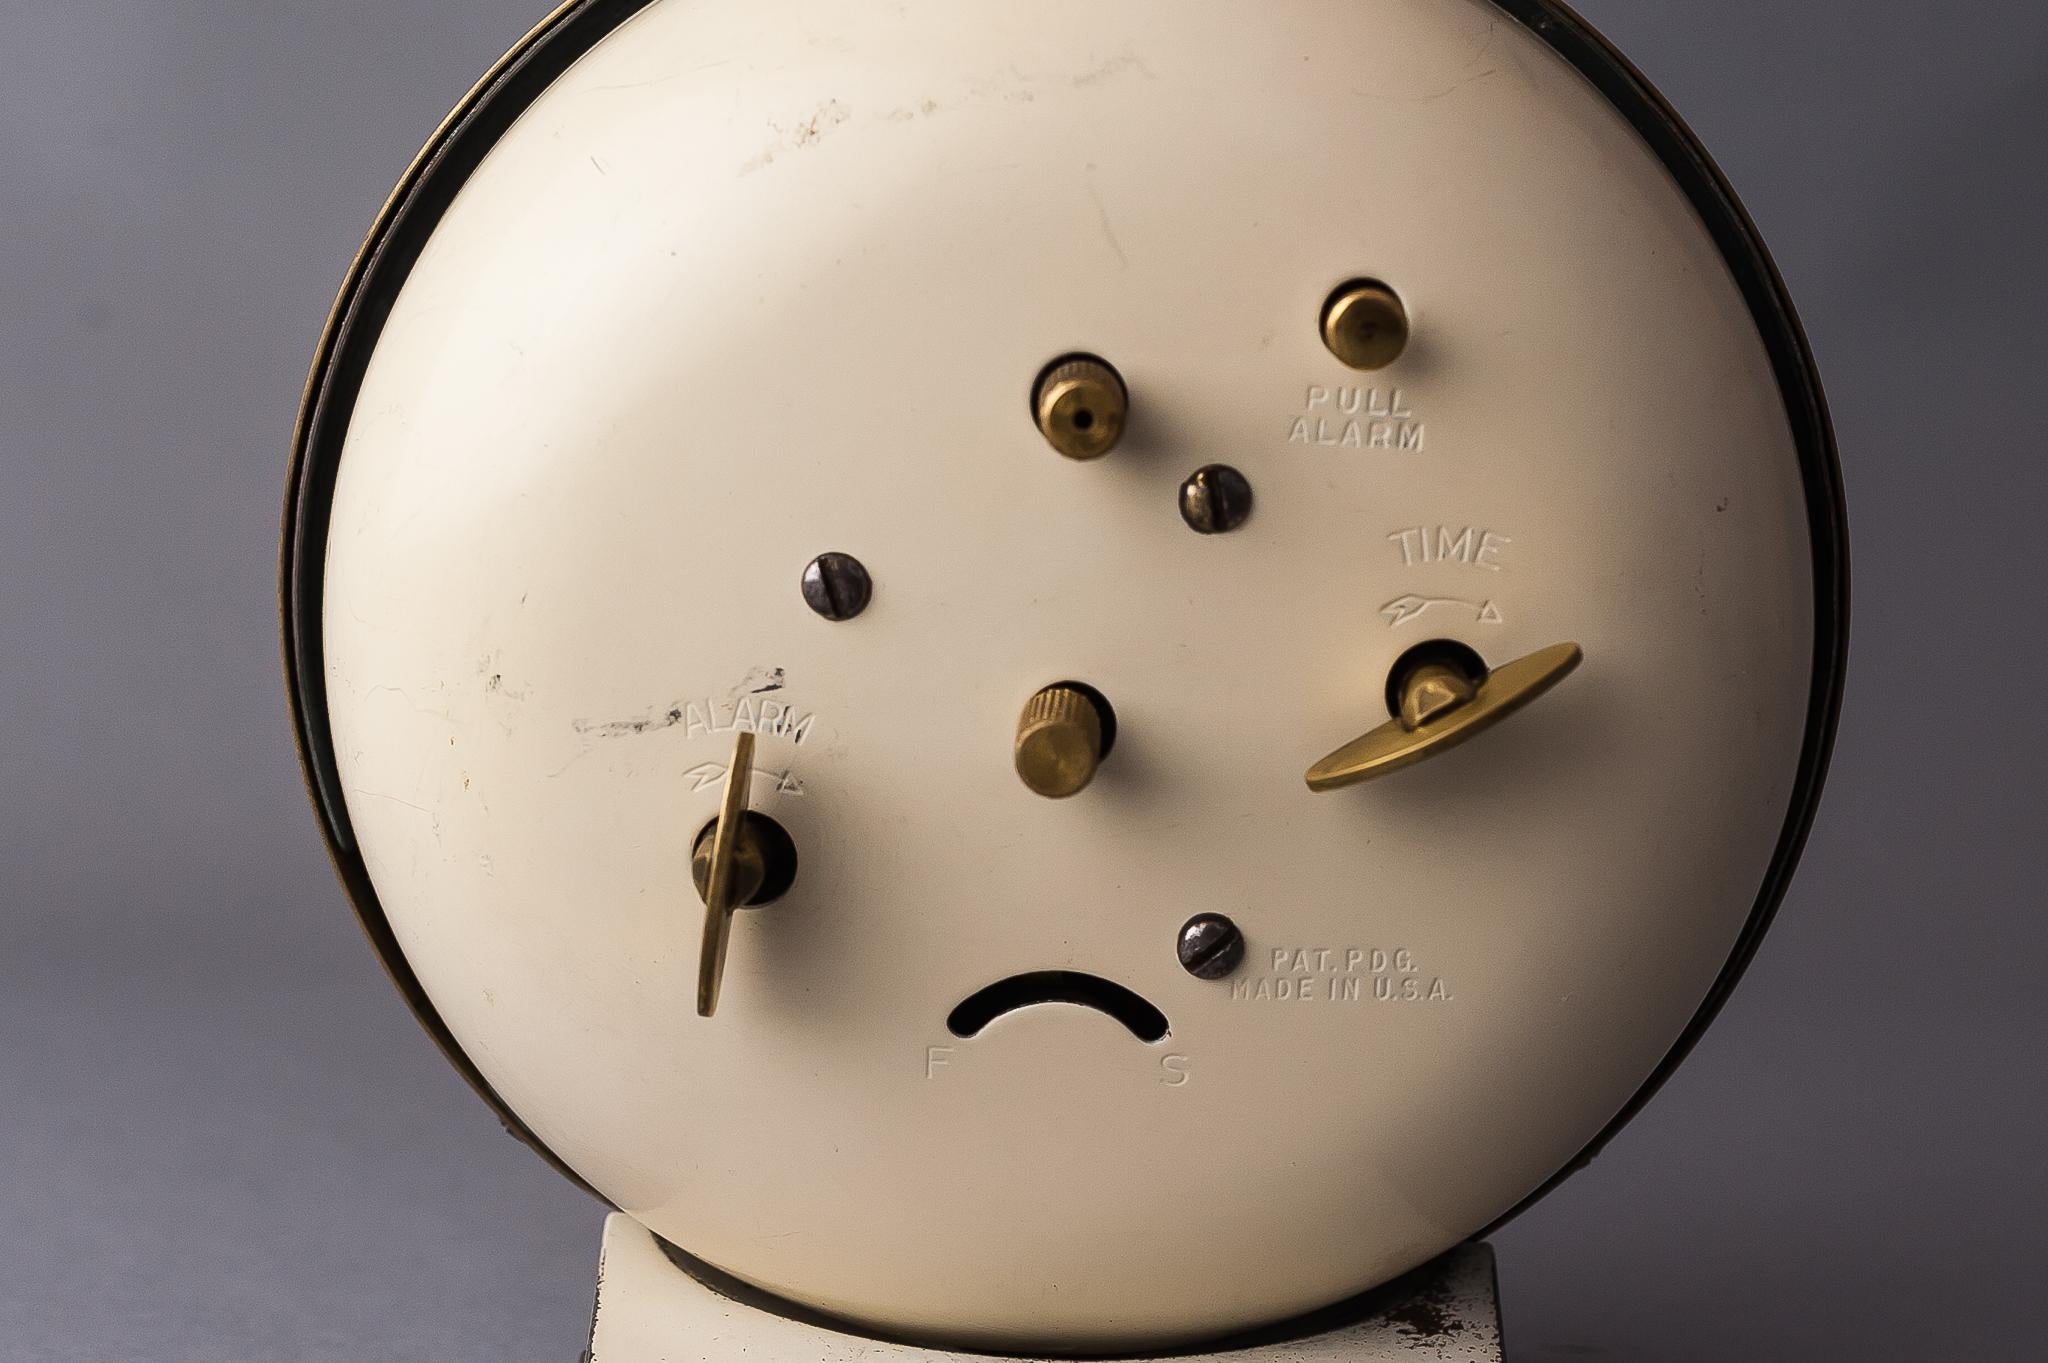 Mid-Century Modern Westclox Big Ben Alarm Clock circa 1950s Made in the U.S.A